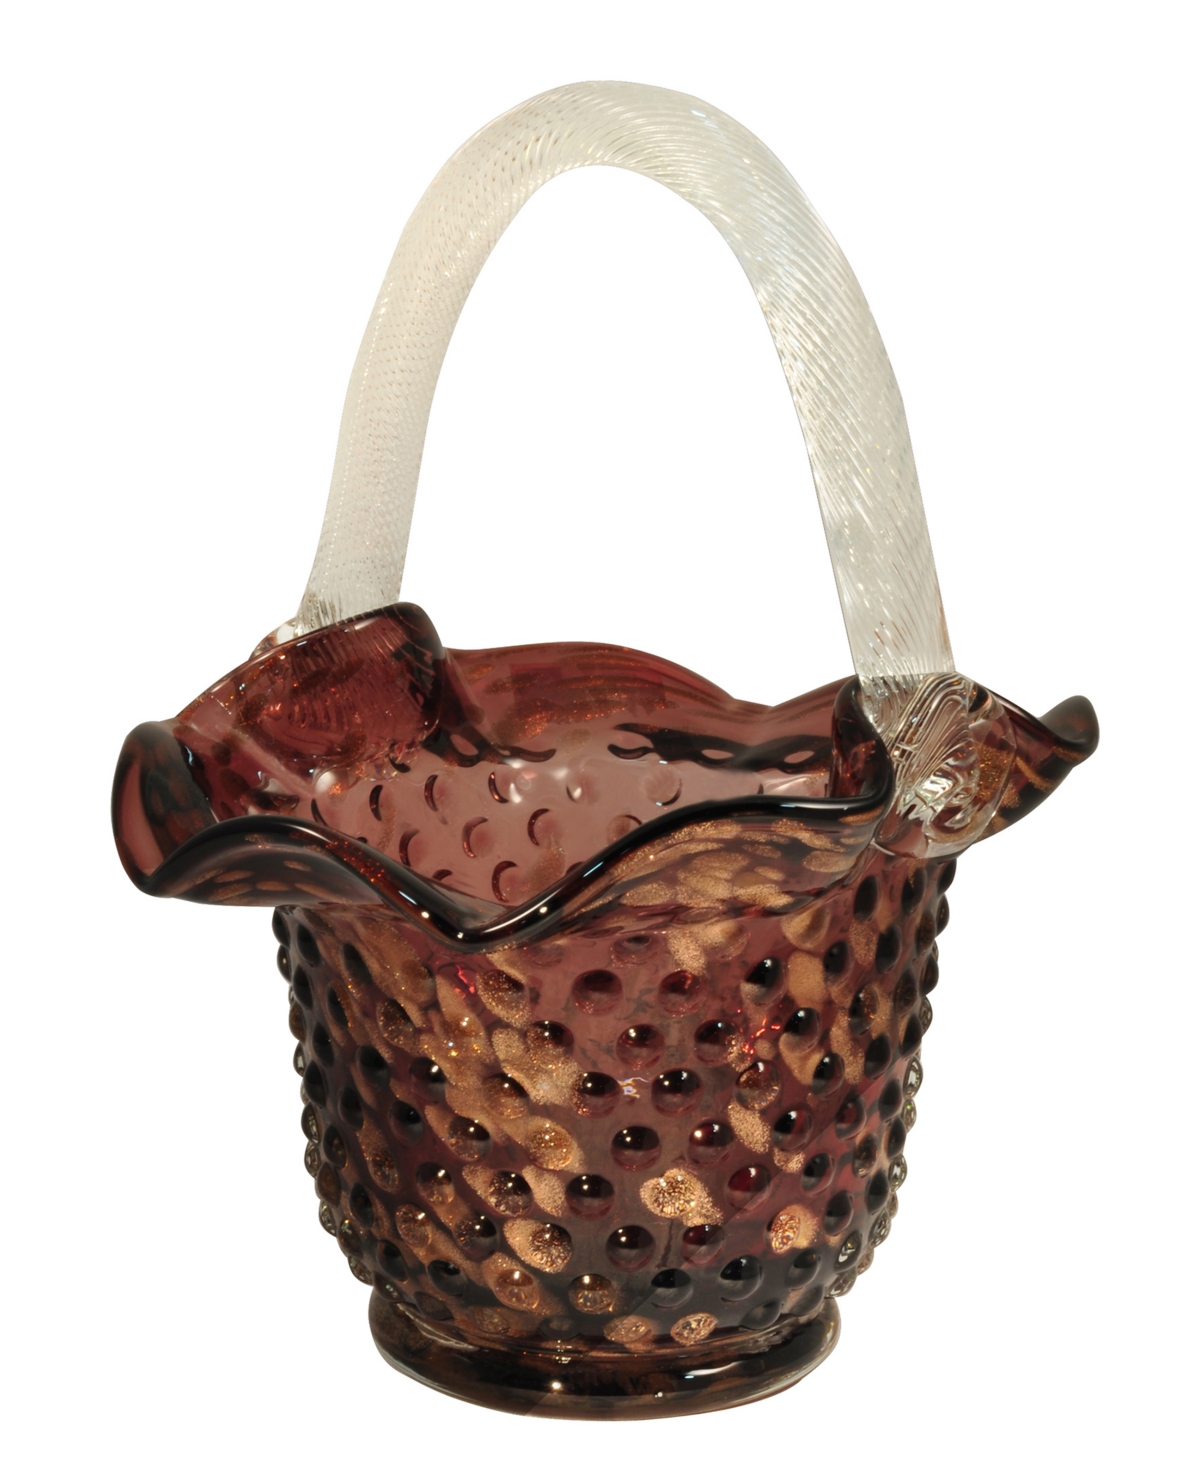 Basket Sculpture - Honey Brown